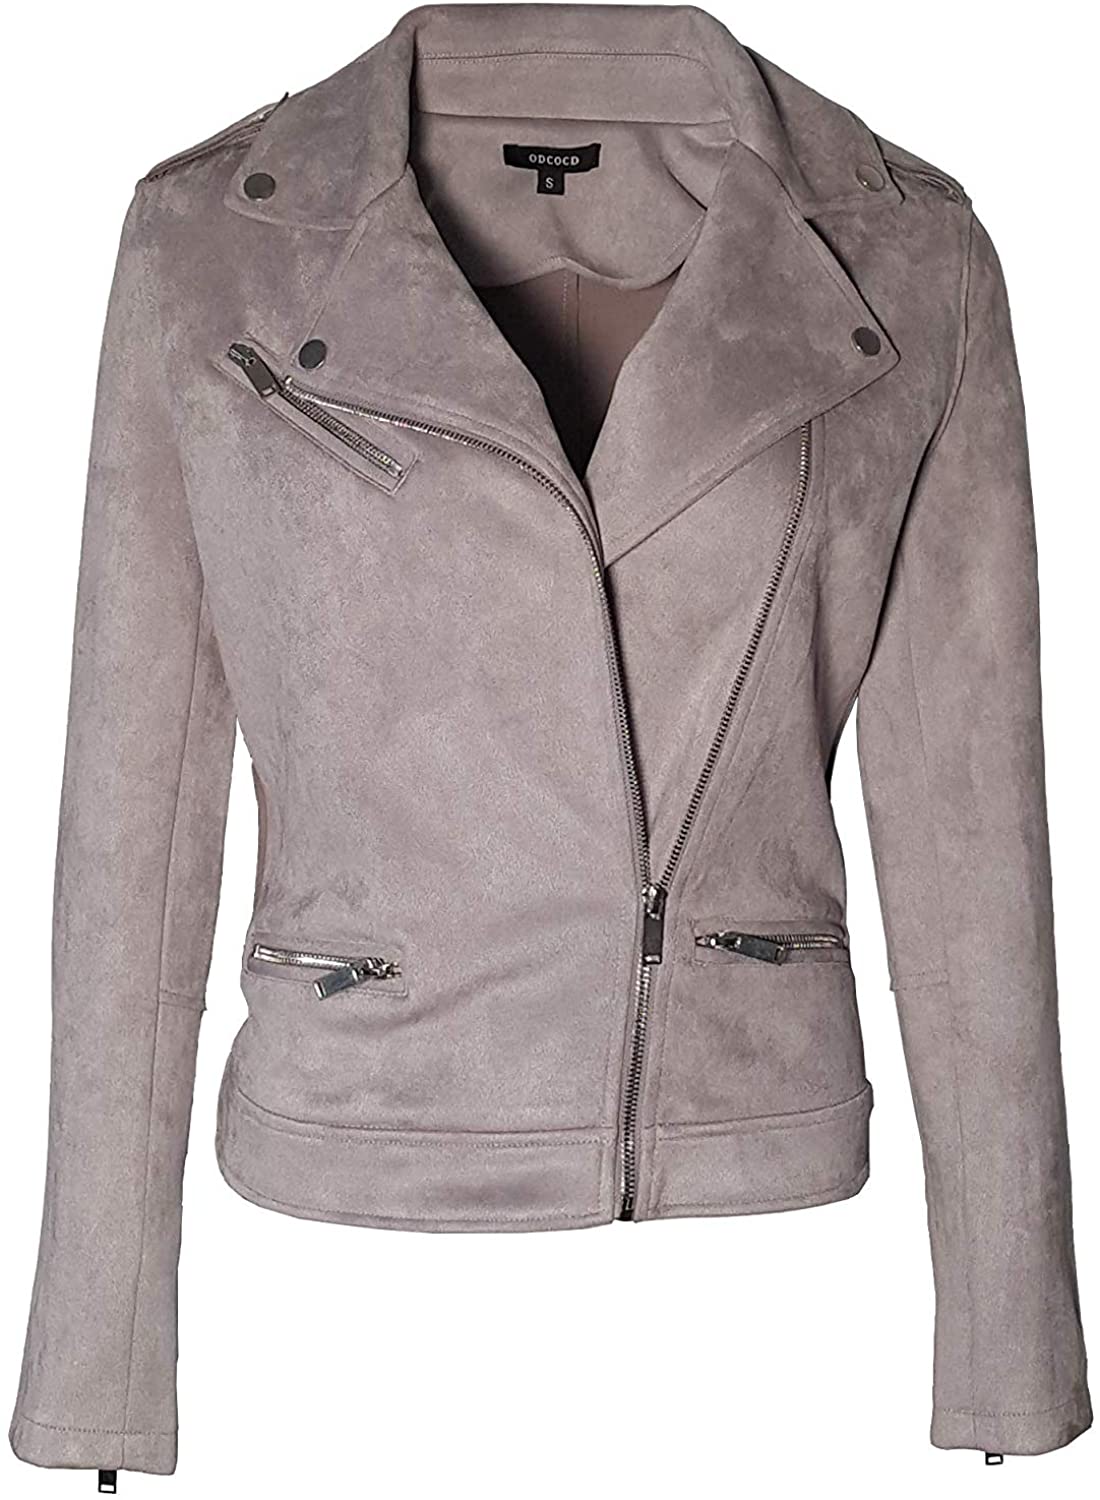 ODCOCD Faux Suede Jacket for Women Long Sleeve Zipper Up Casual Outwear 